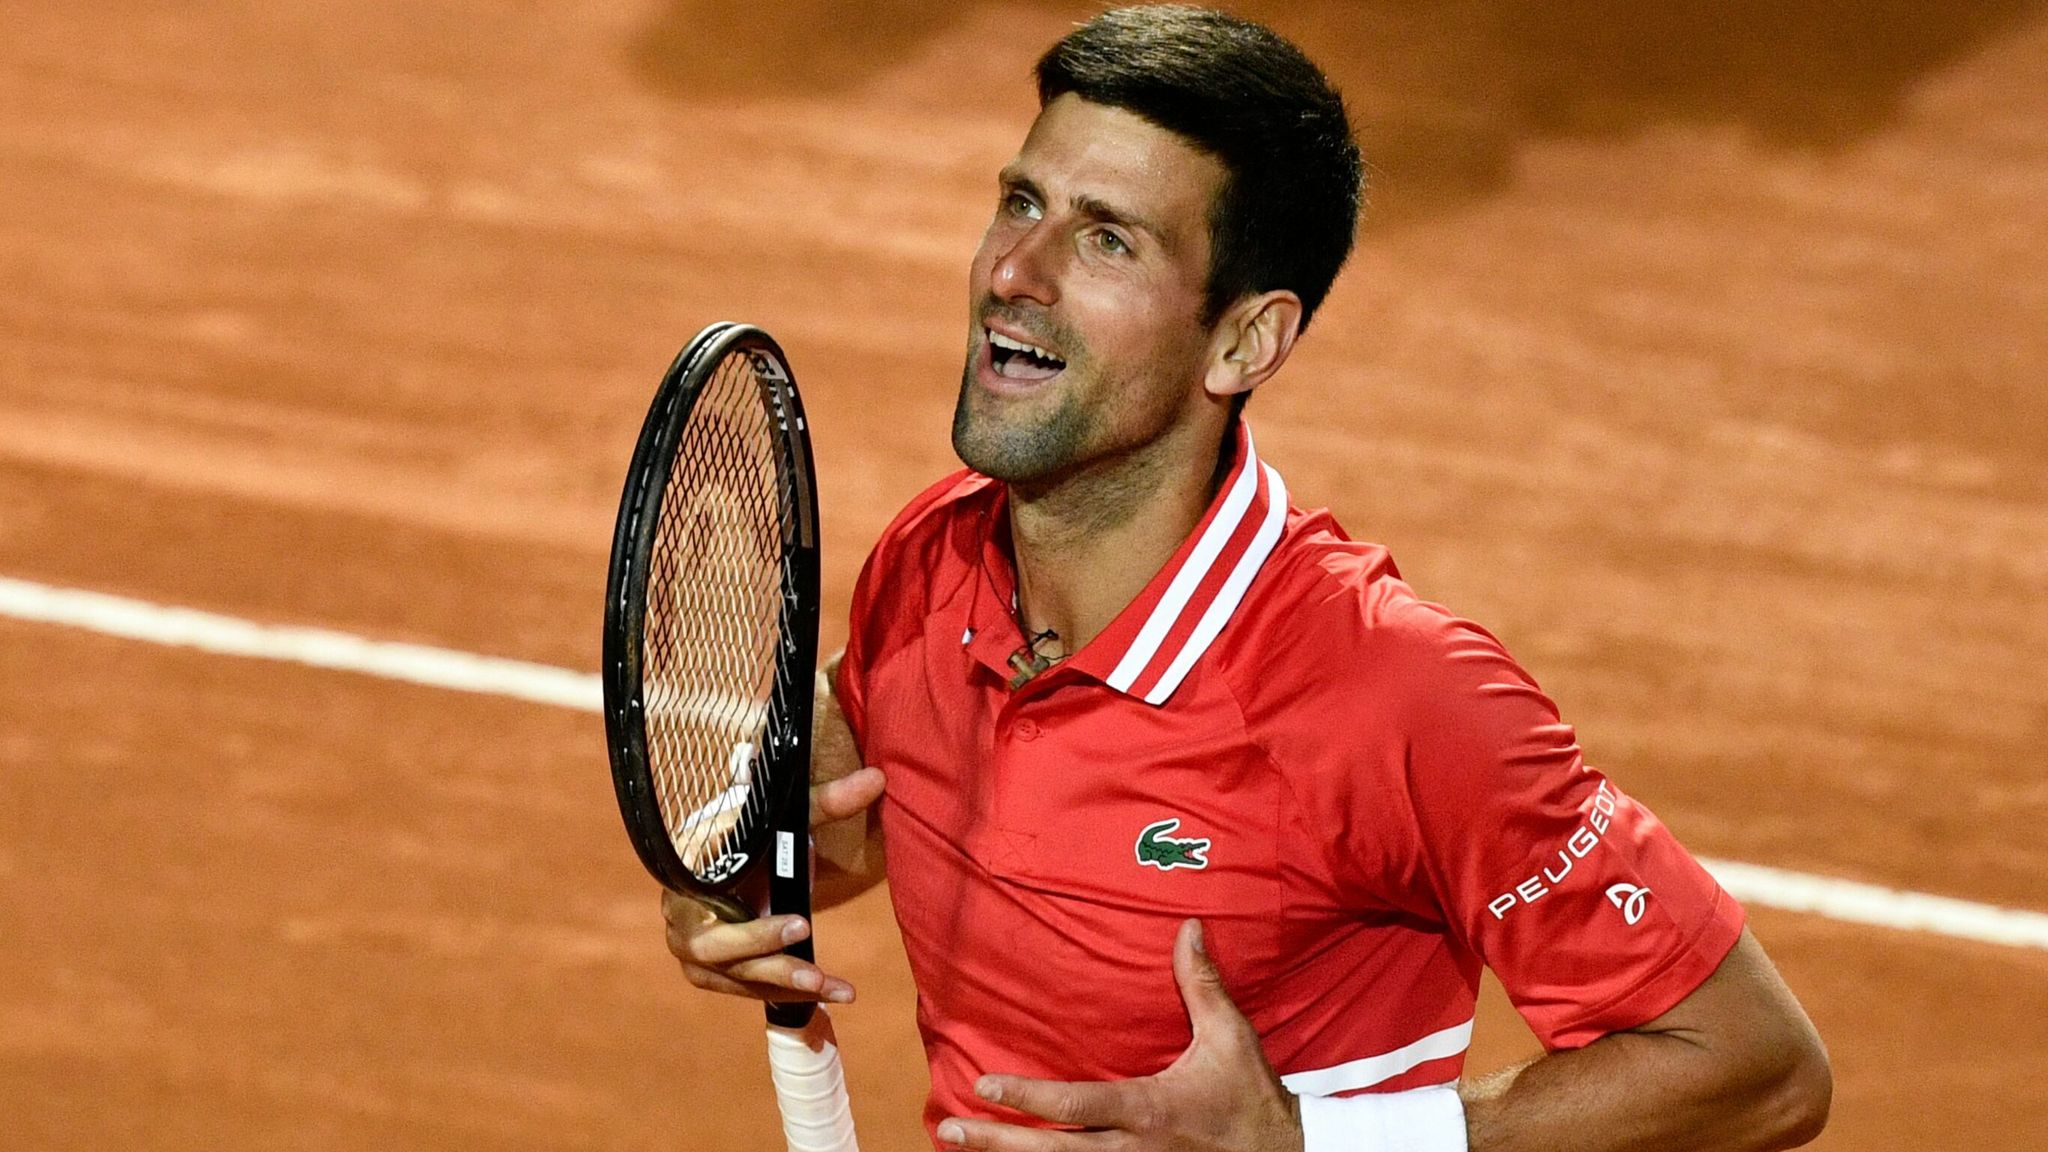 Rome Masters Novak Djokovic to take on Rafael Nadal in Sundays final Tennis News Sky Sports